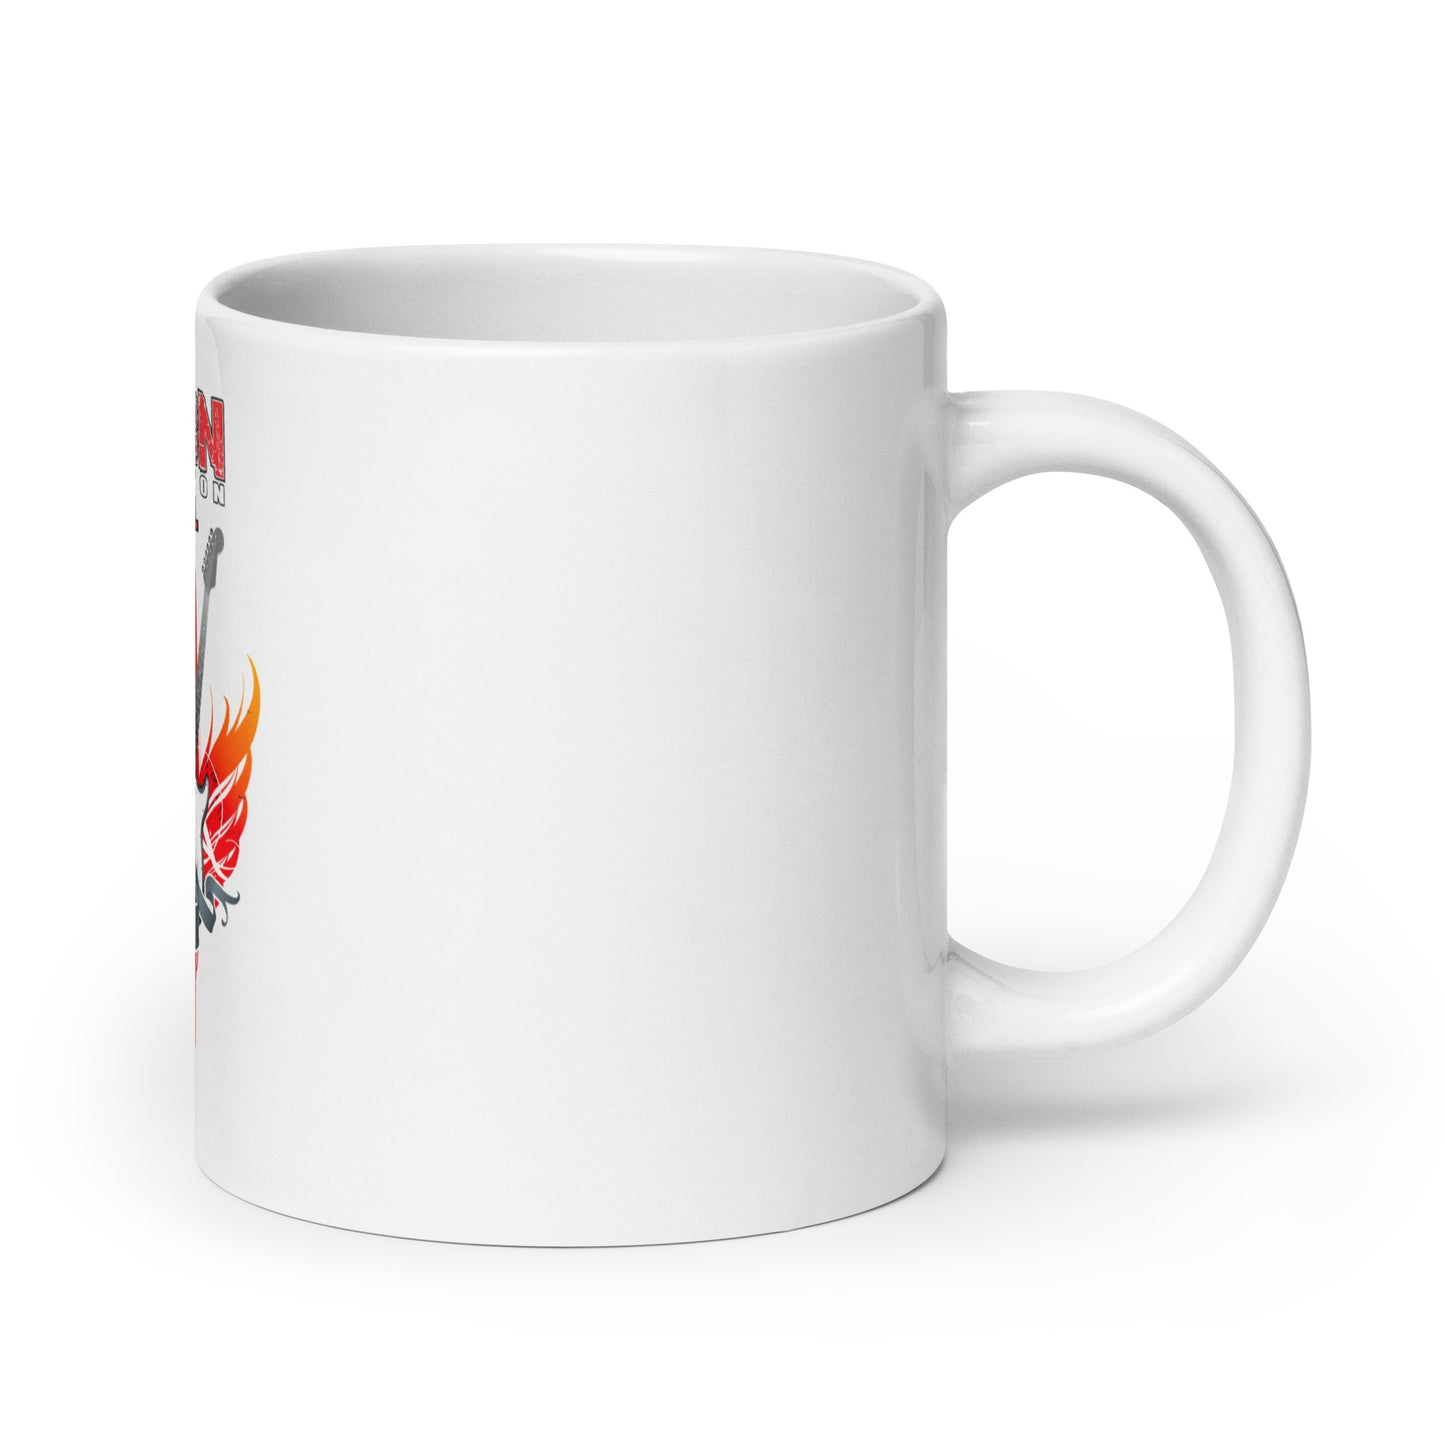 Rock In' Shepparton Coffee Mug